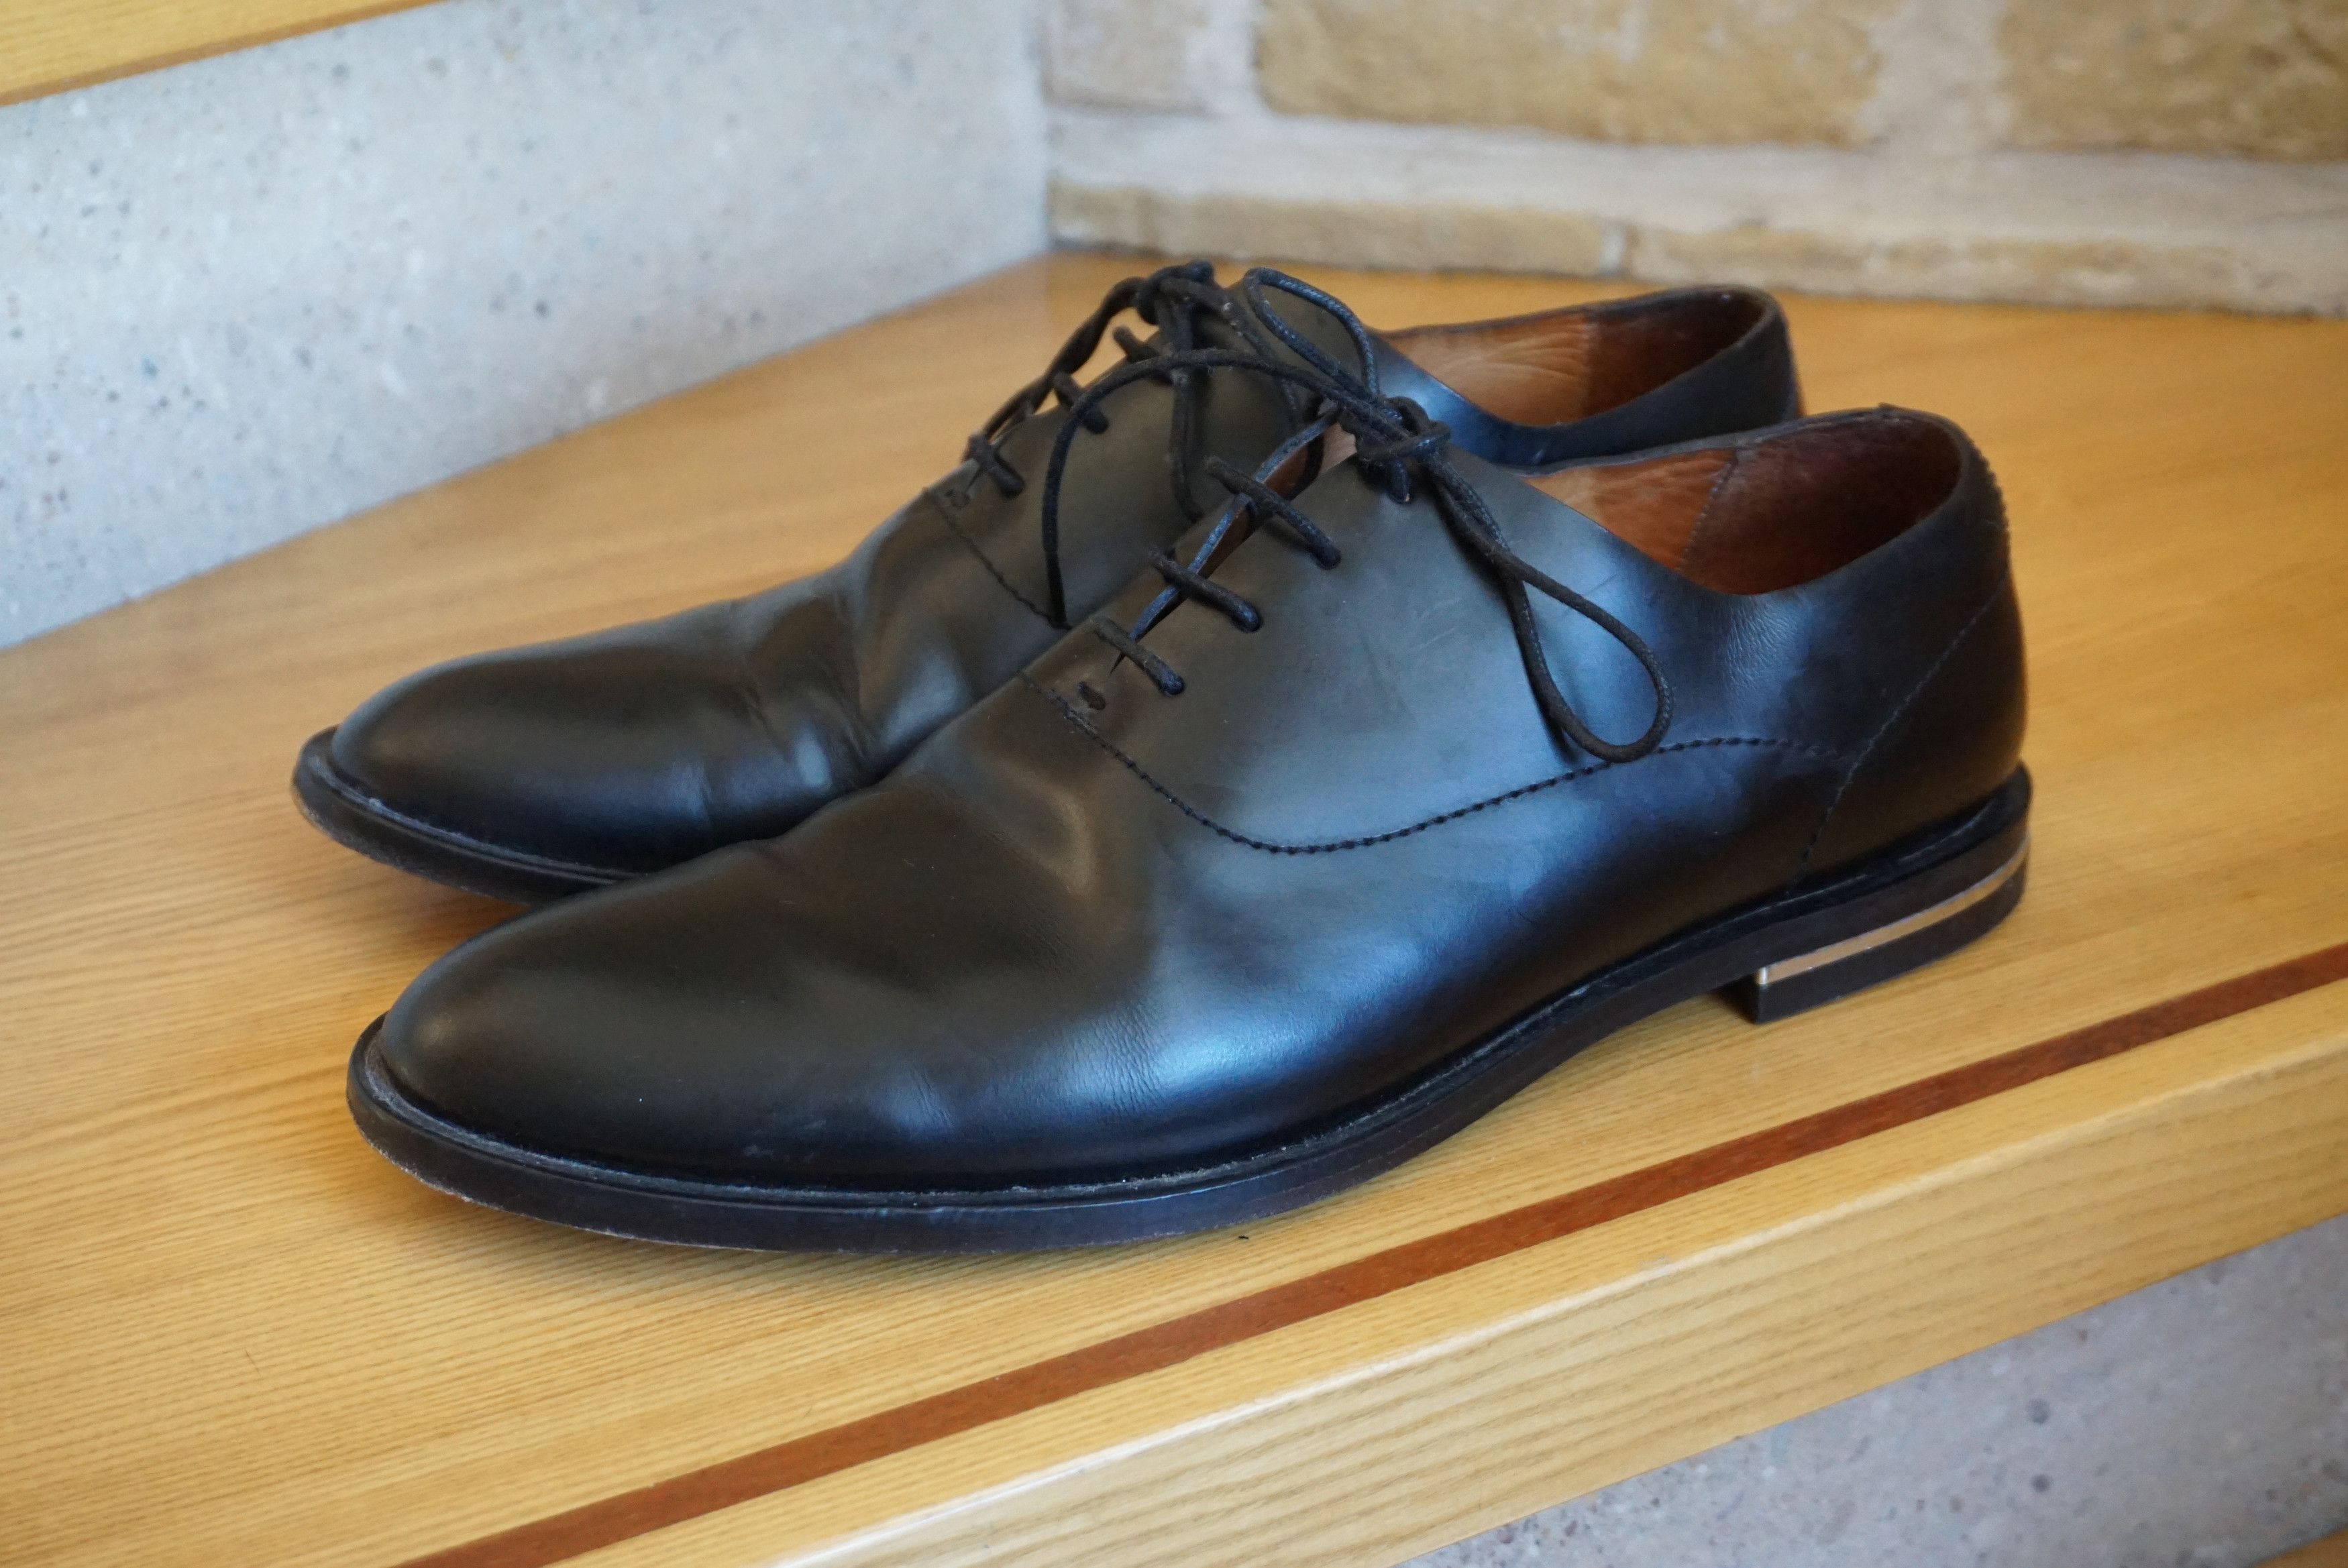 Cos COS RPR$250 leather office shoes EU44 black formal lace up Size US 10.5 / EU 43-44 - 11 Thumbnail